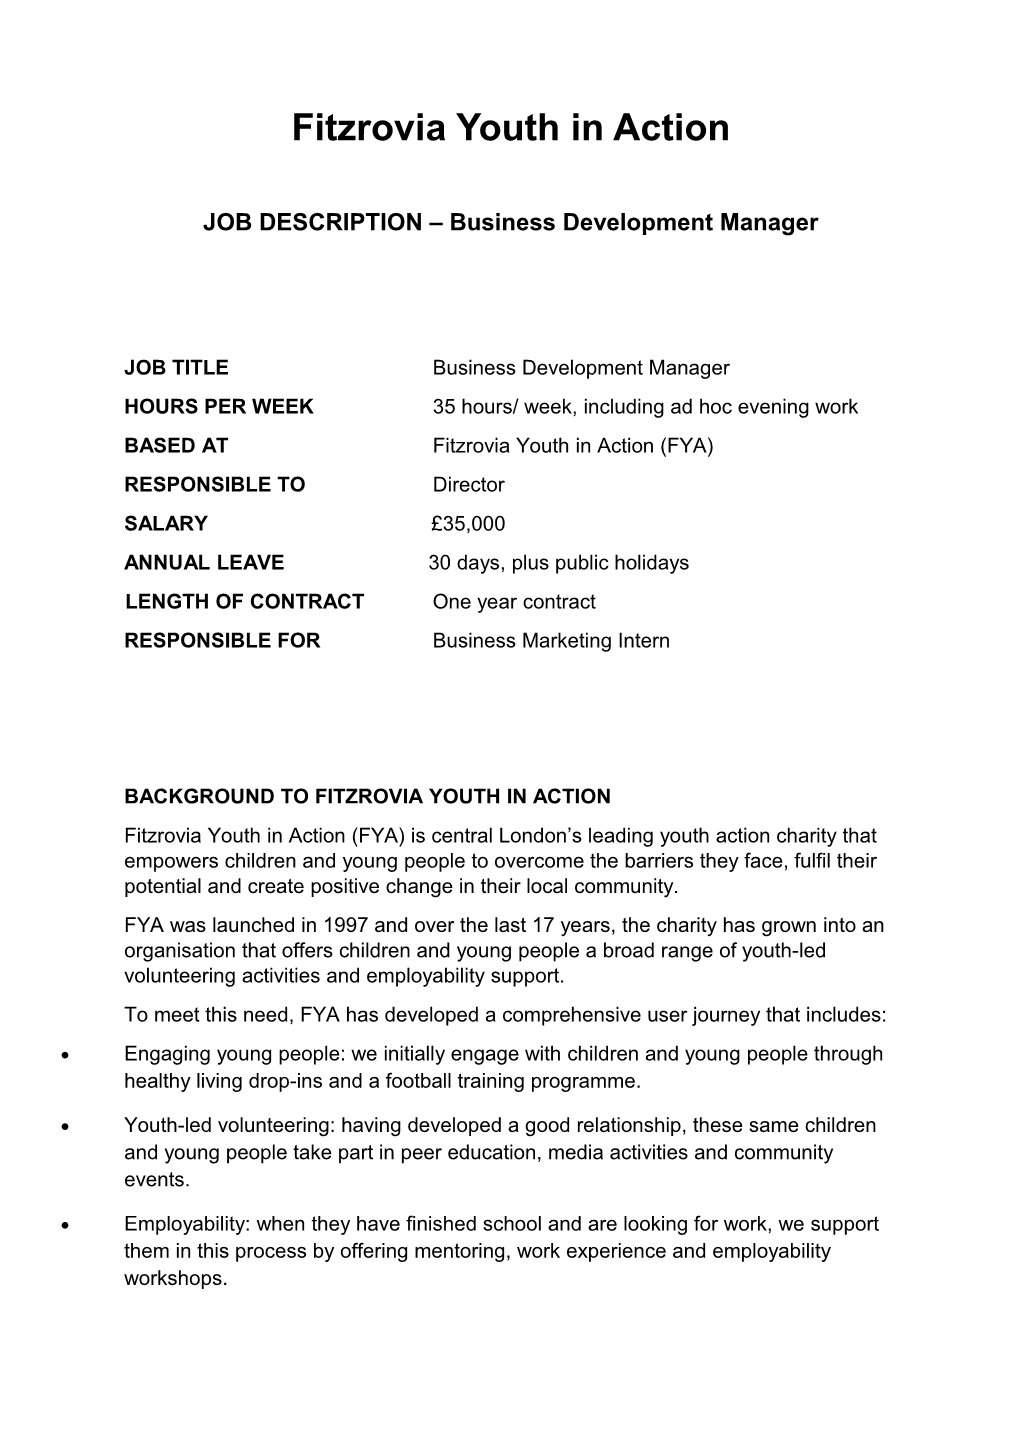 JOB DESCRIPTION Business Development Manager